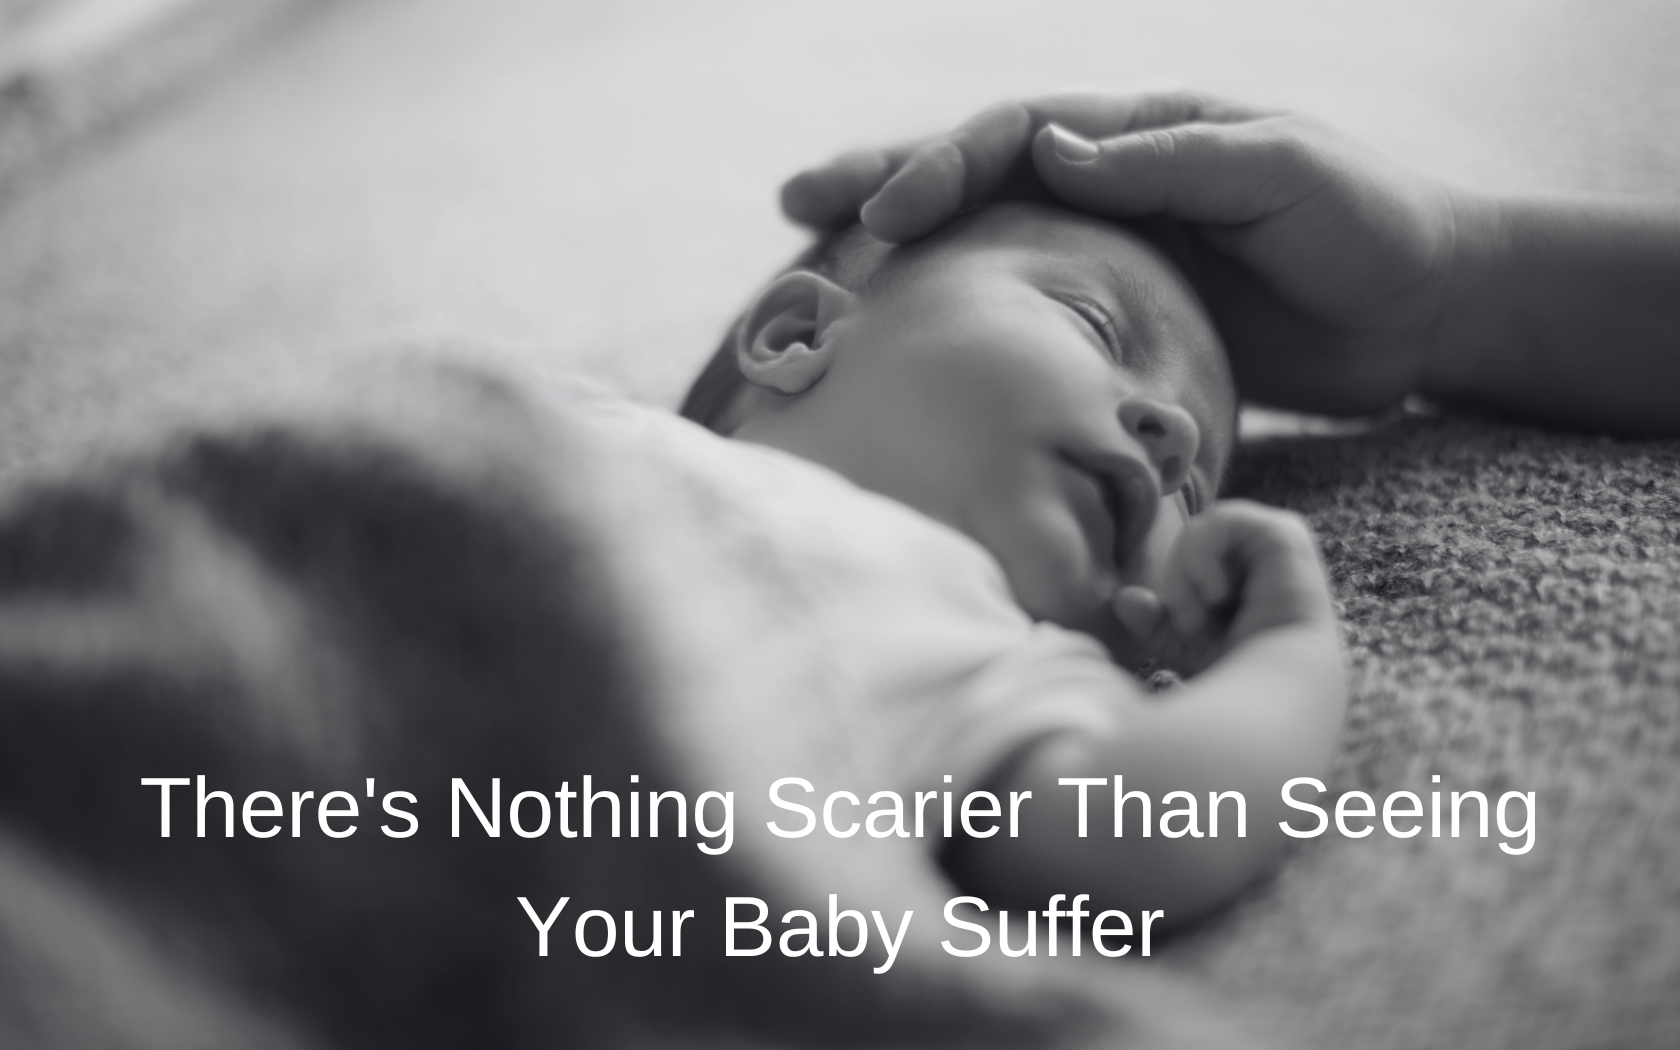 Baby faces uncertainty after newborn seizure.